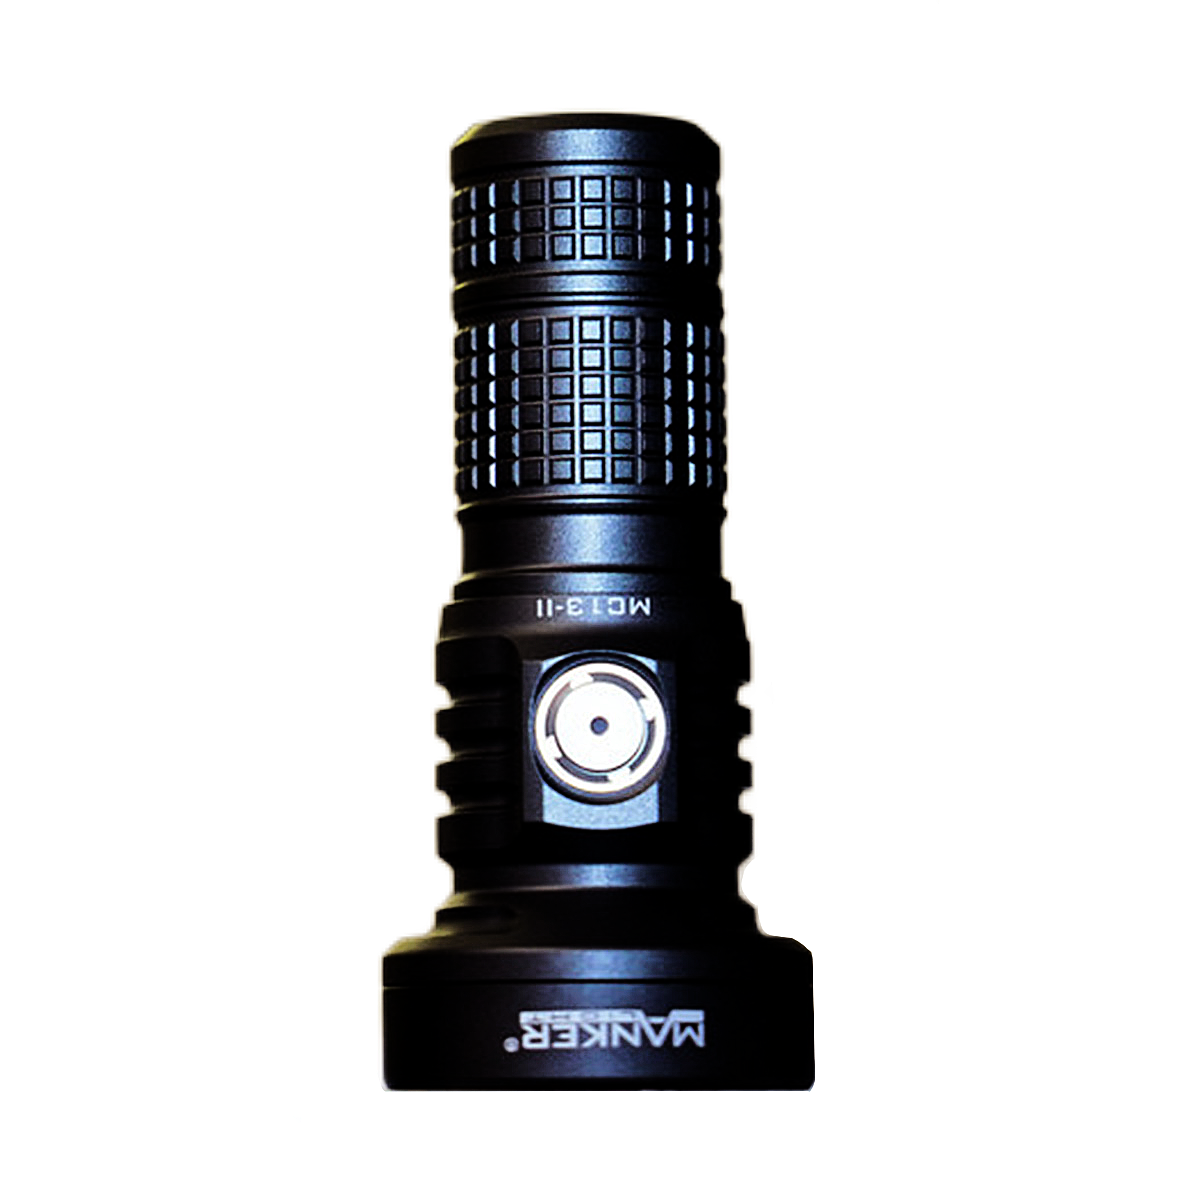 Mankerlight MC13 II SBT90 GEN2 LED Edc Flashlight Dual Use 18650 and 18350 Battery PVD Black